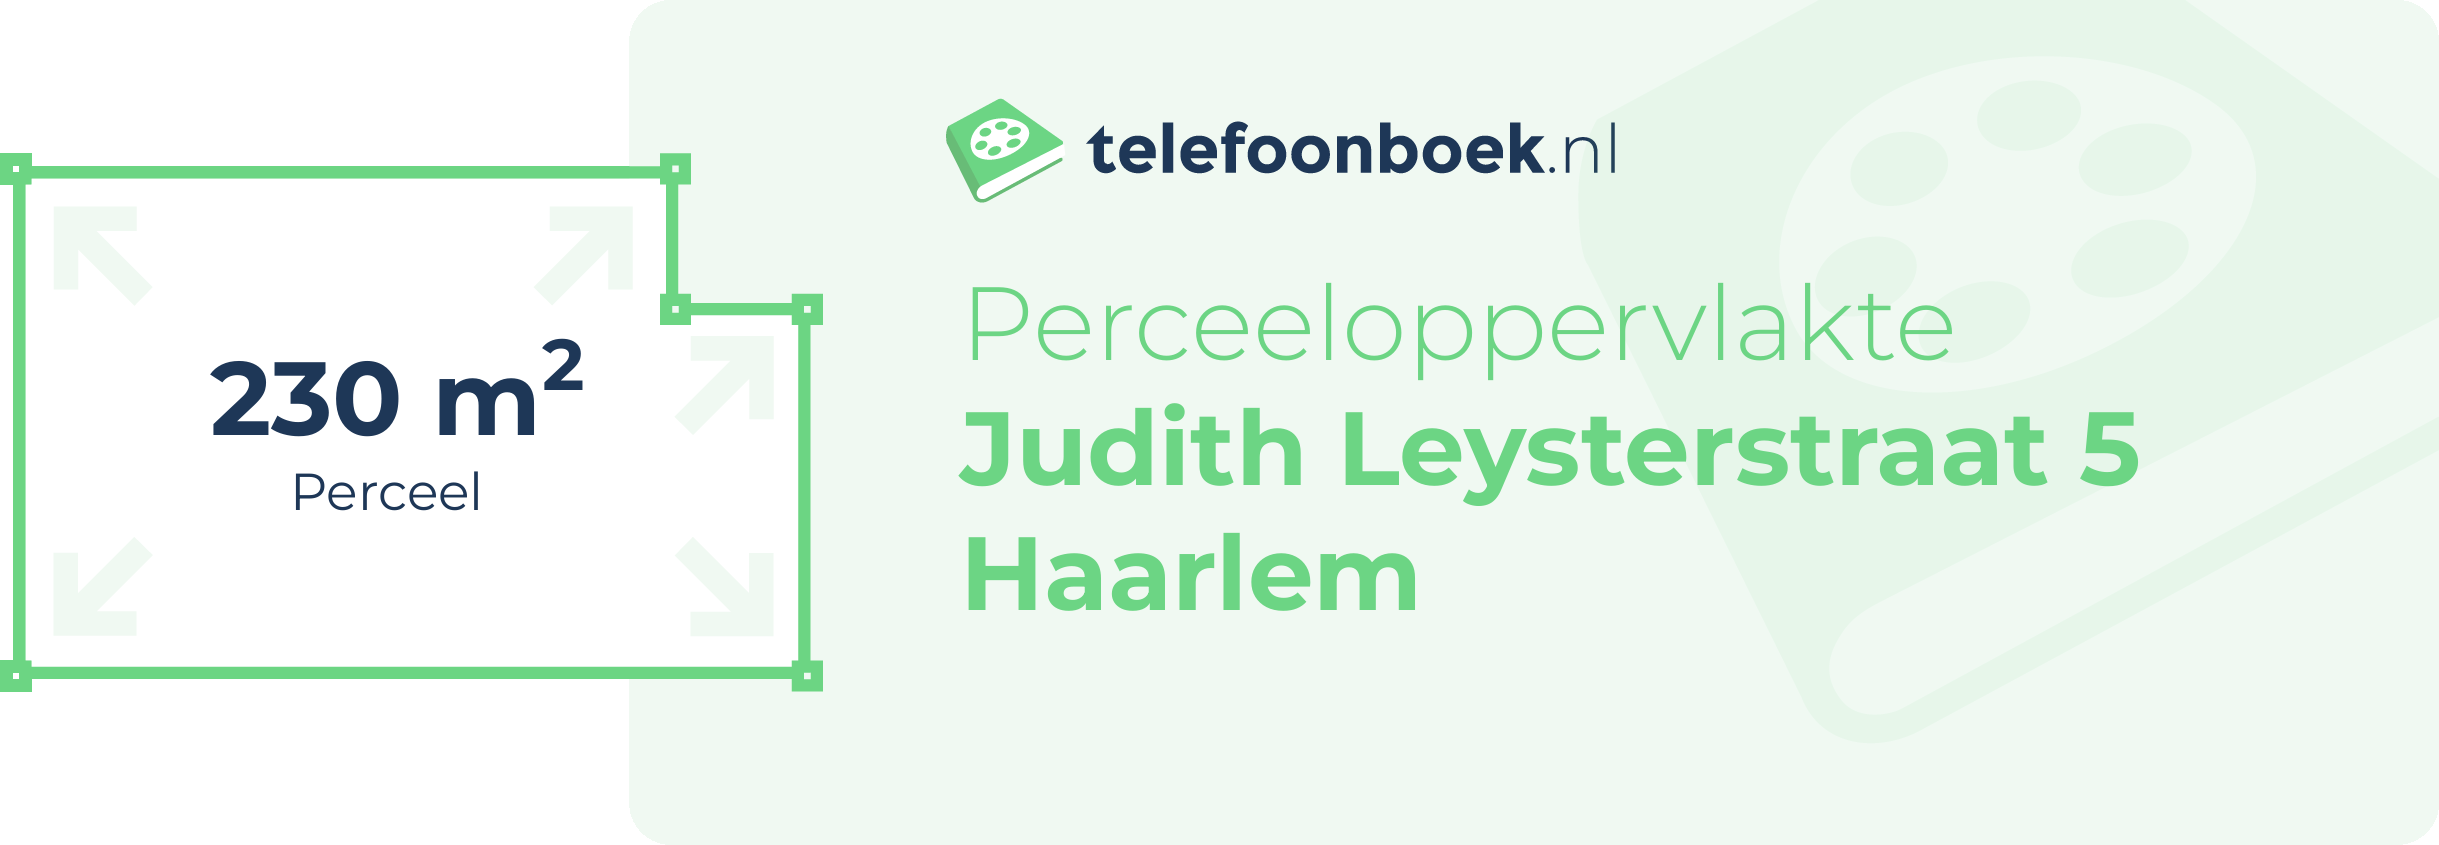 Perceeloppervlakte Judith Leysterstraat 5 Haarlem